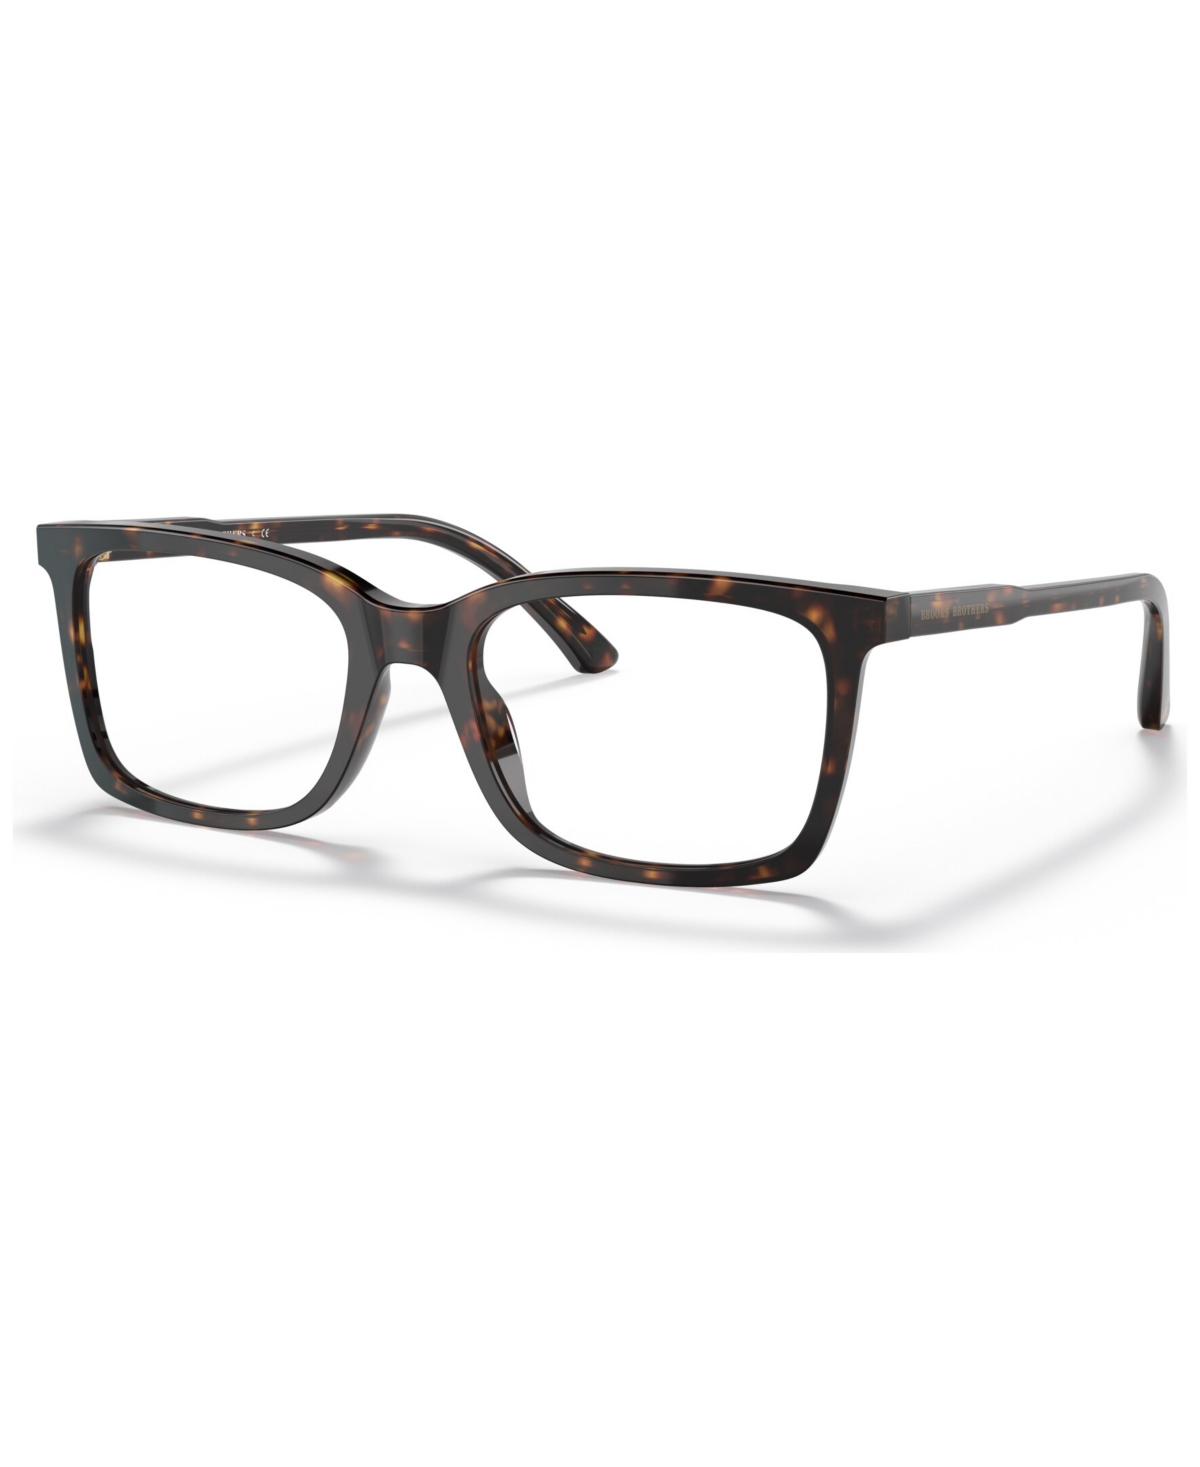 Men's Square Eyeglasses, BB205055-o - Gray, Crystal